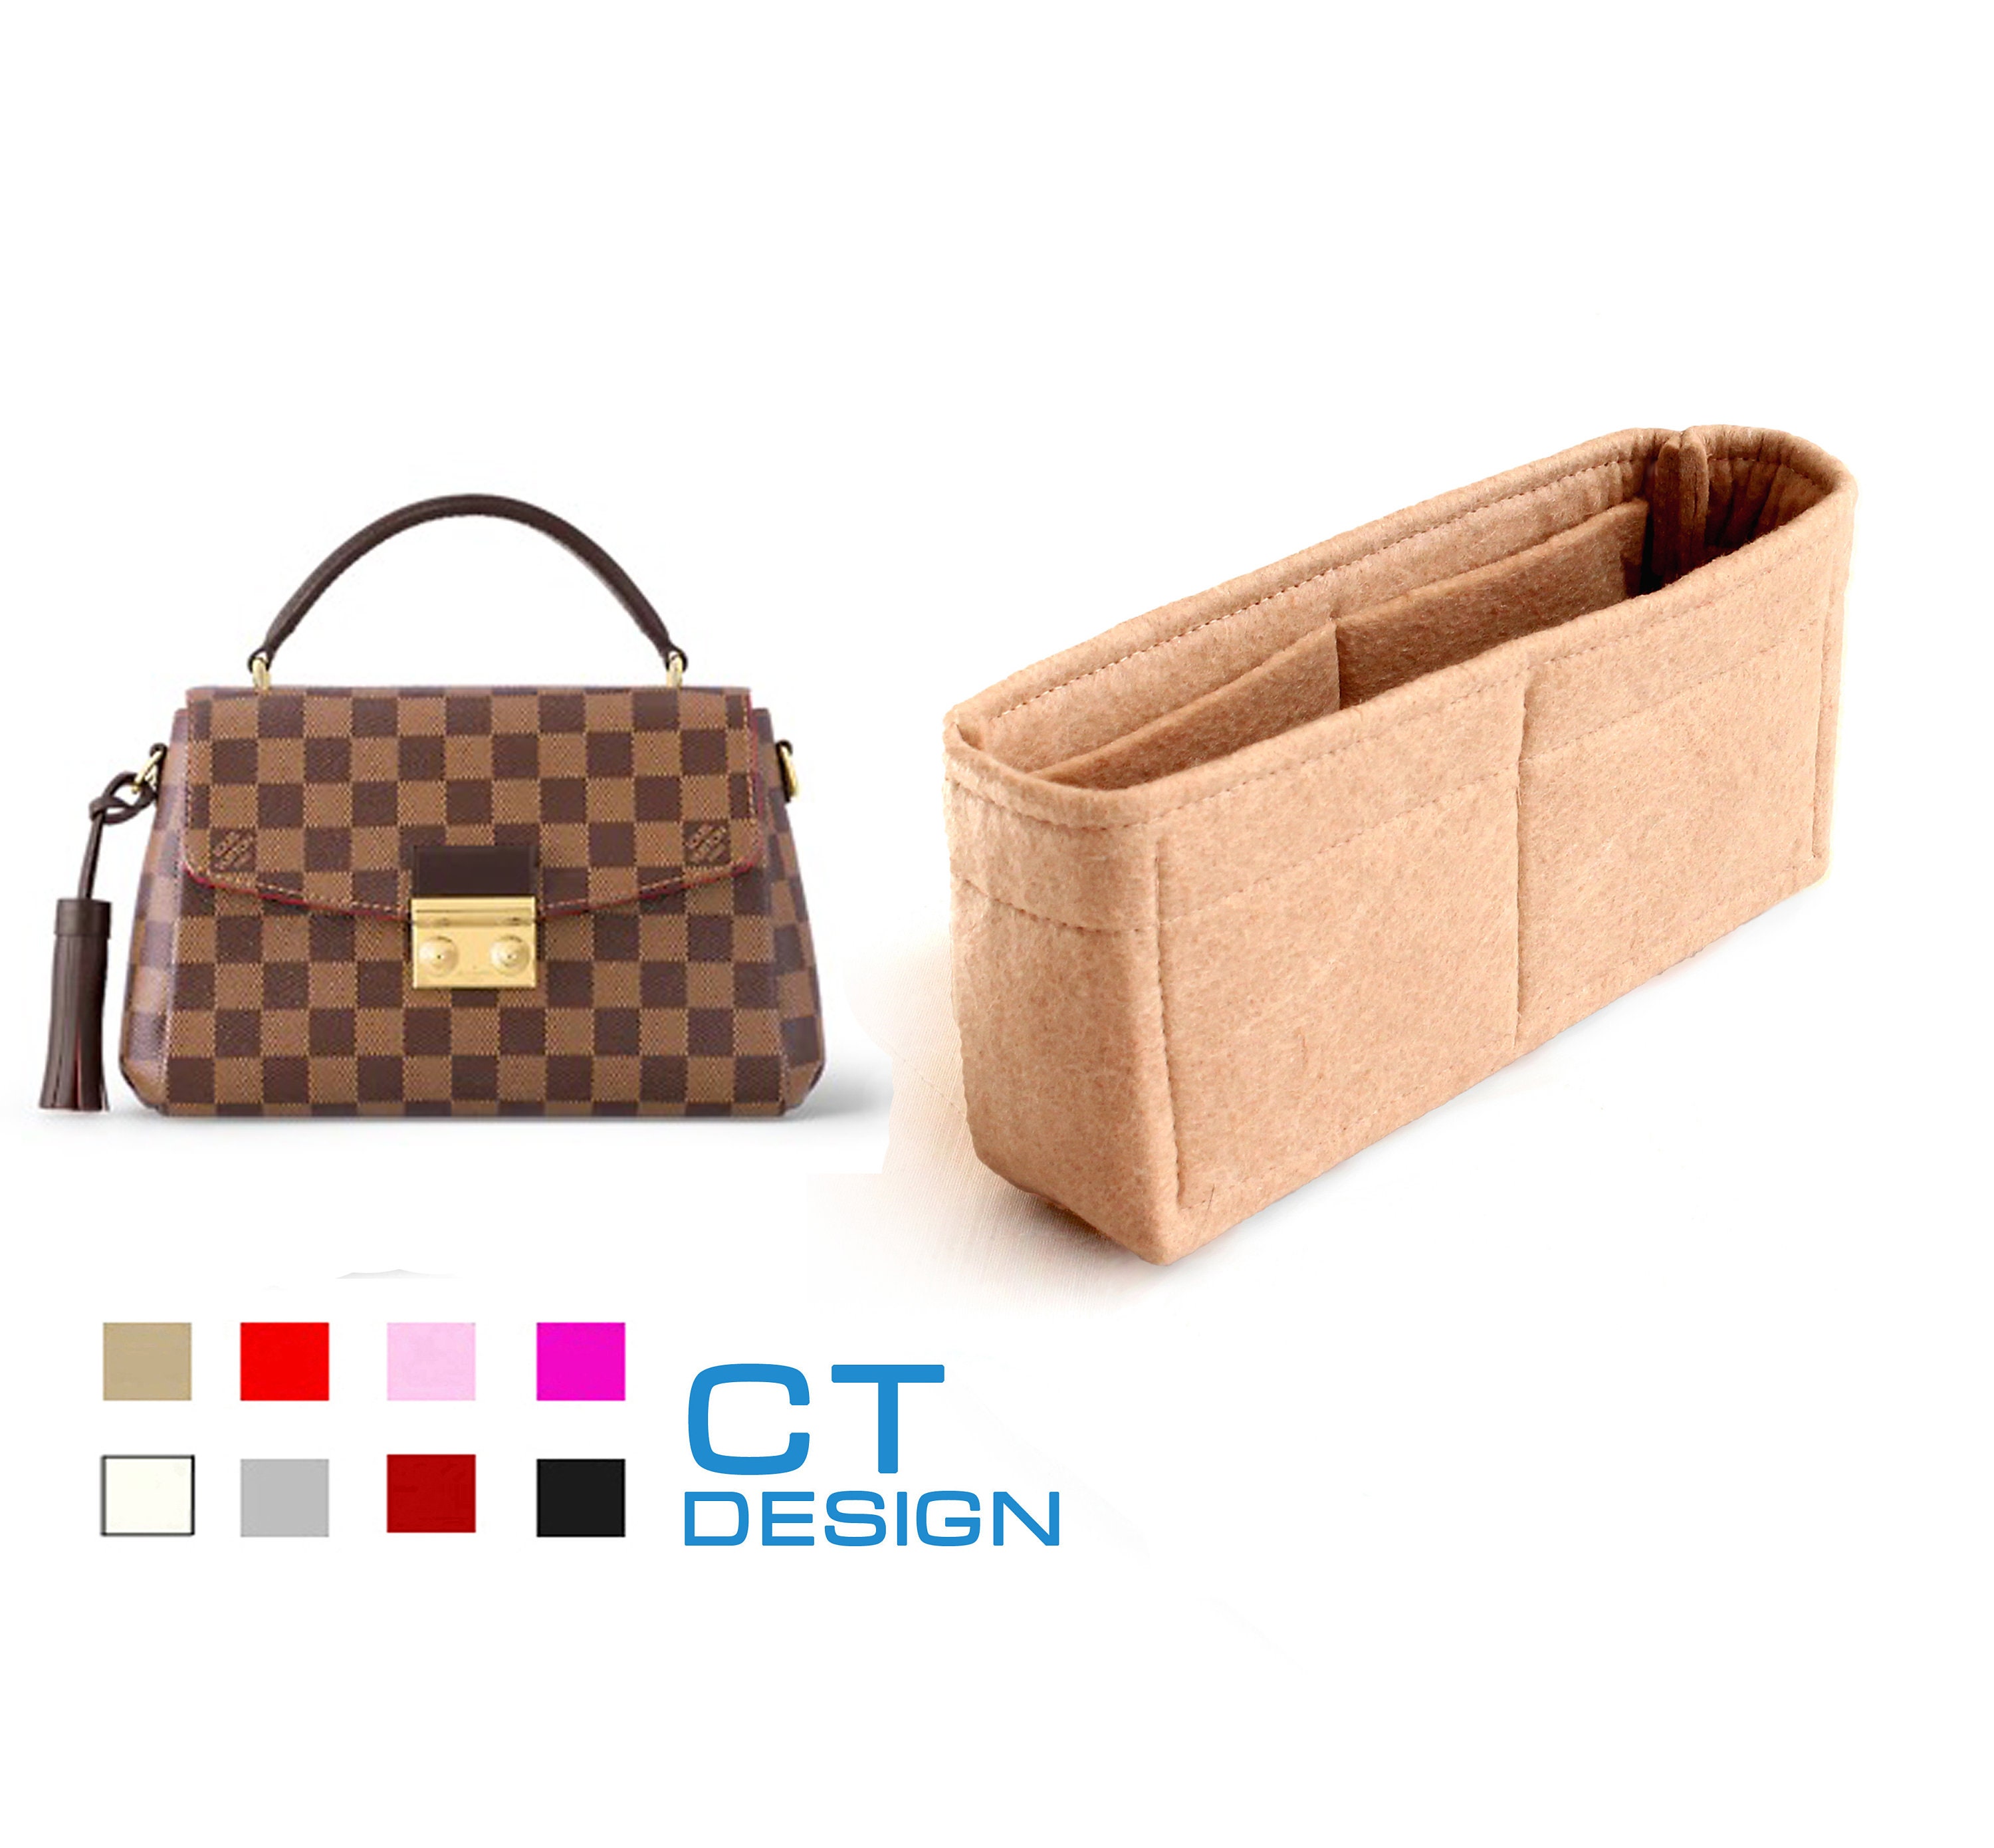  Bag Organizer for LV Croisette - Premium Felt